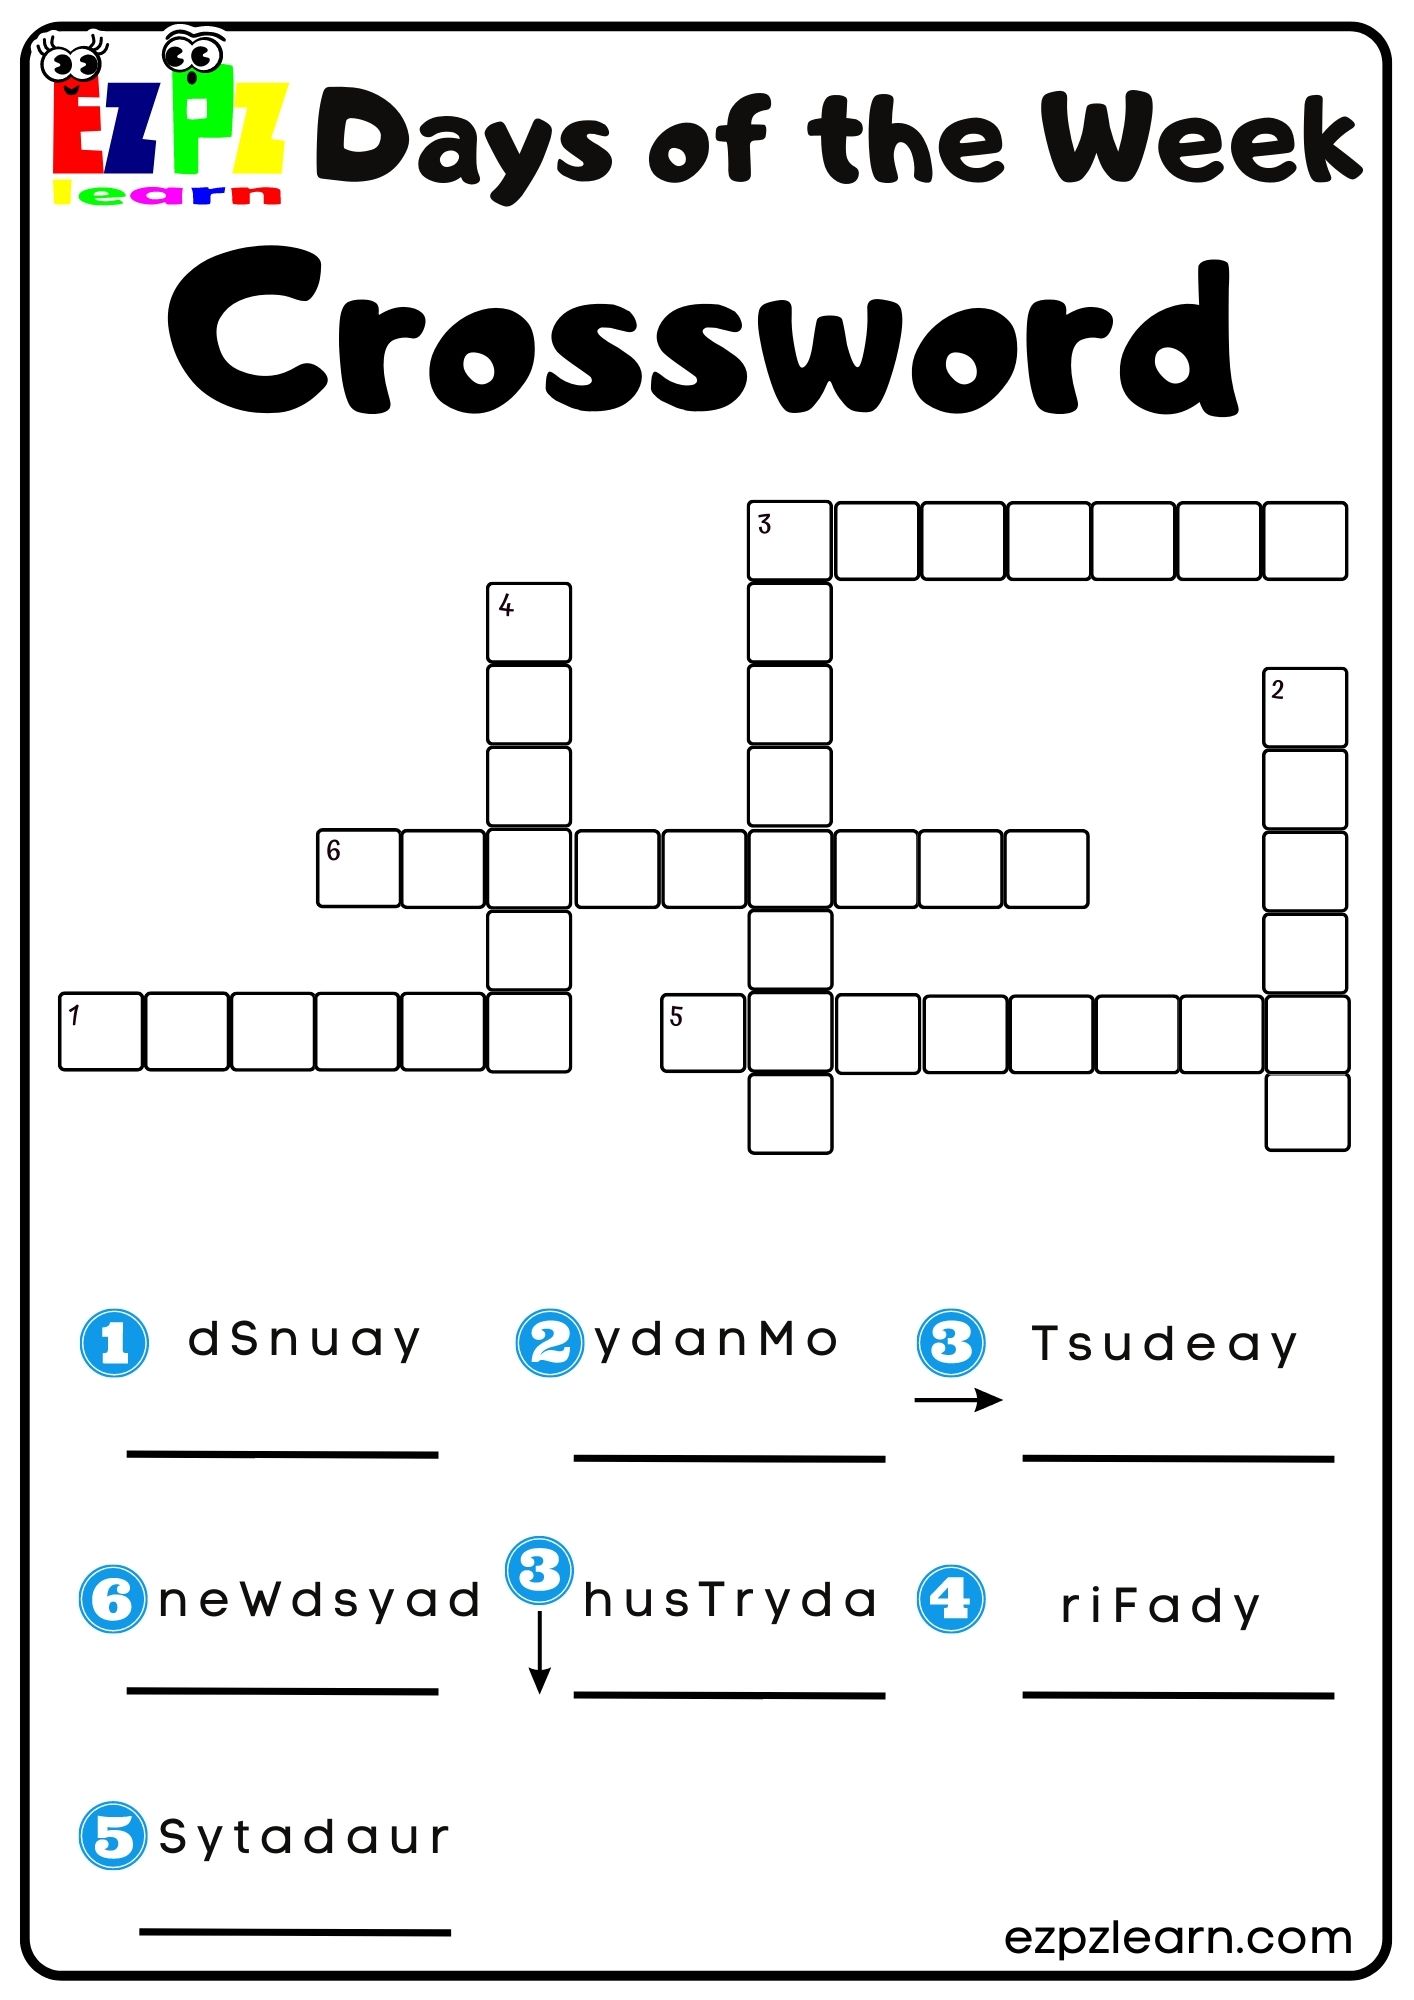 Days of the Week Crossword